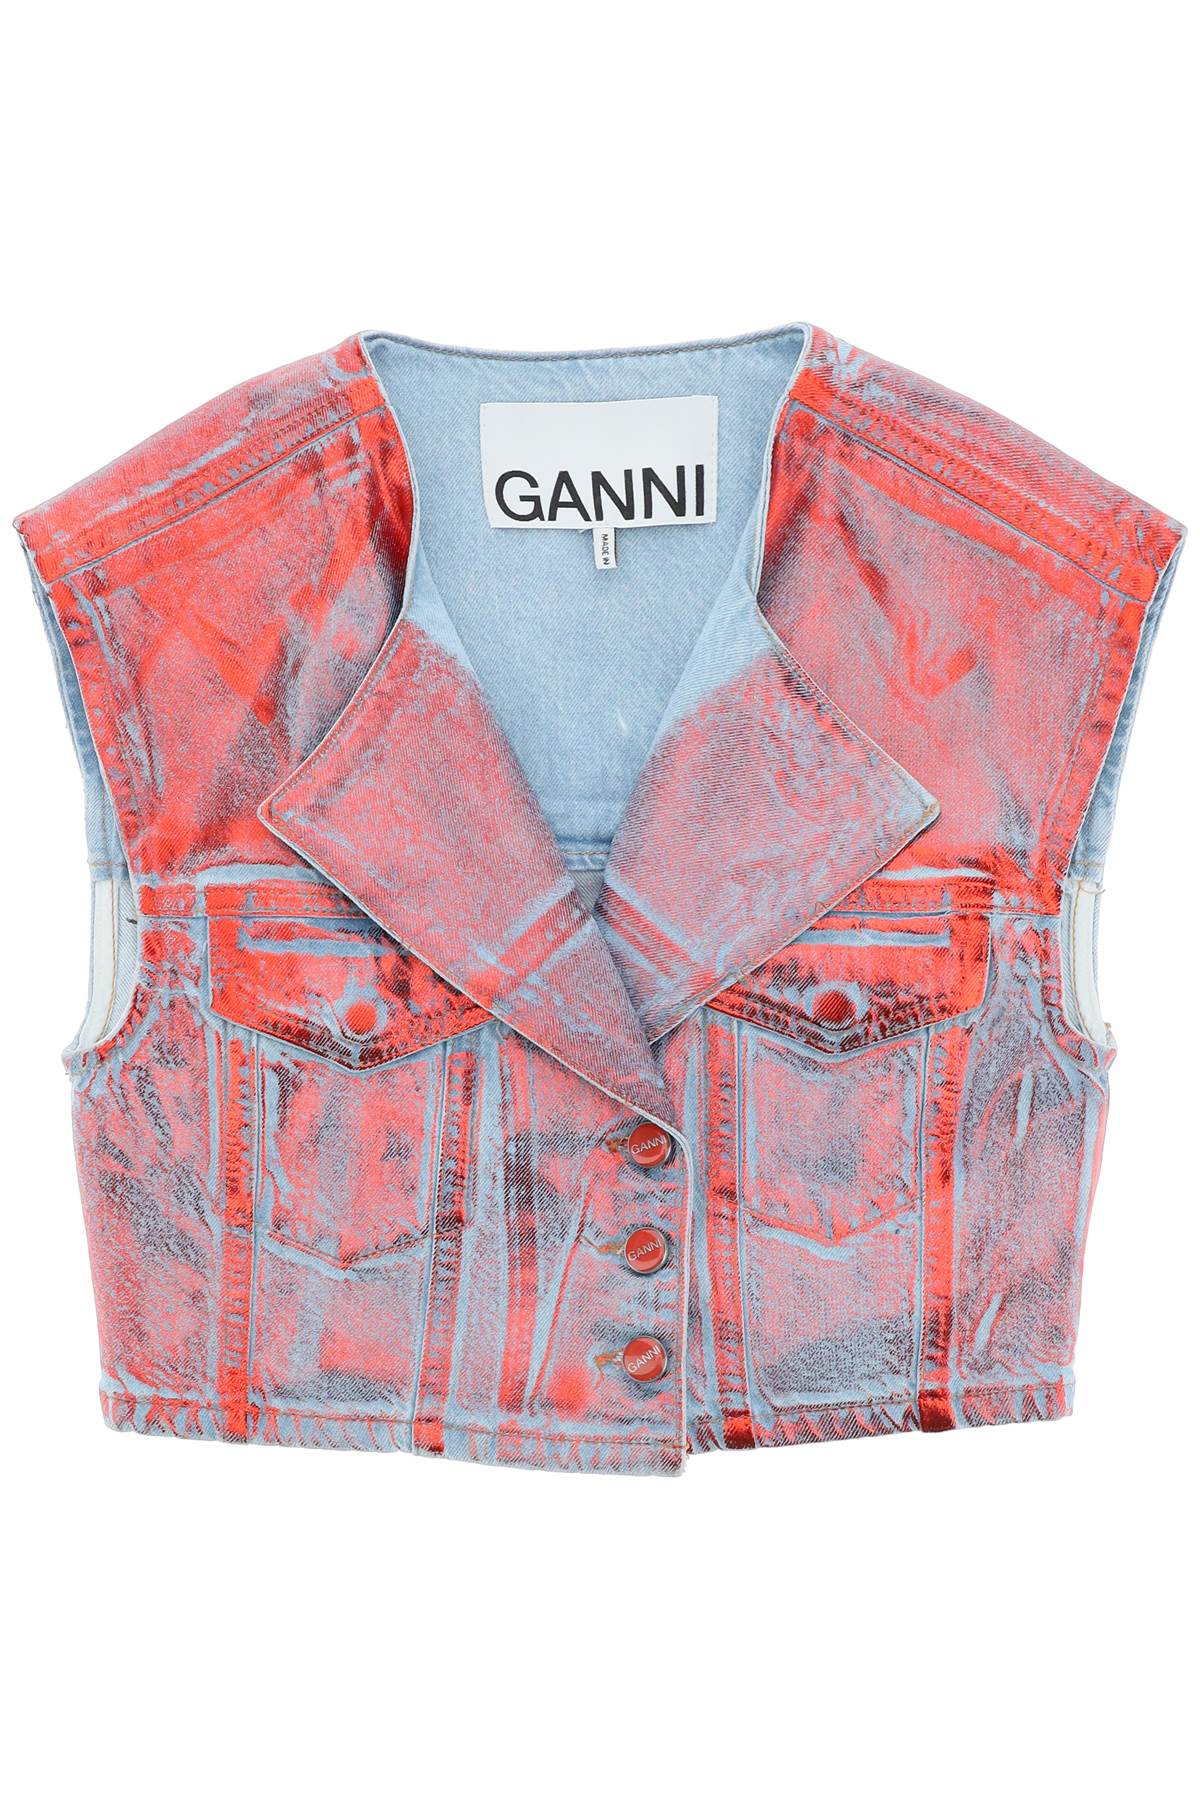 Ganni cropped vest in laminated denim-0